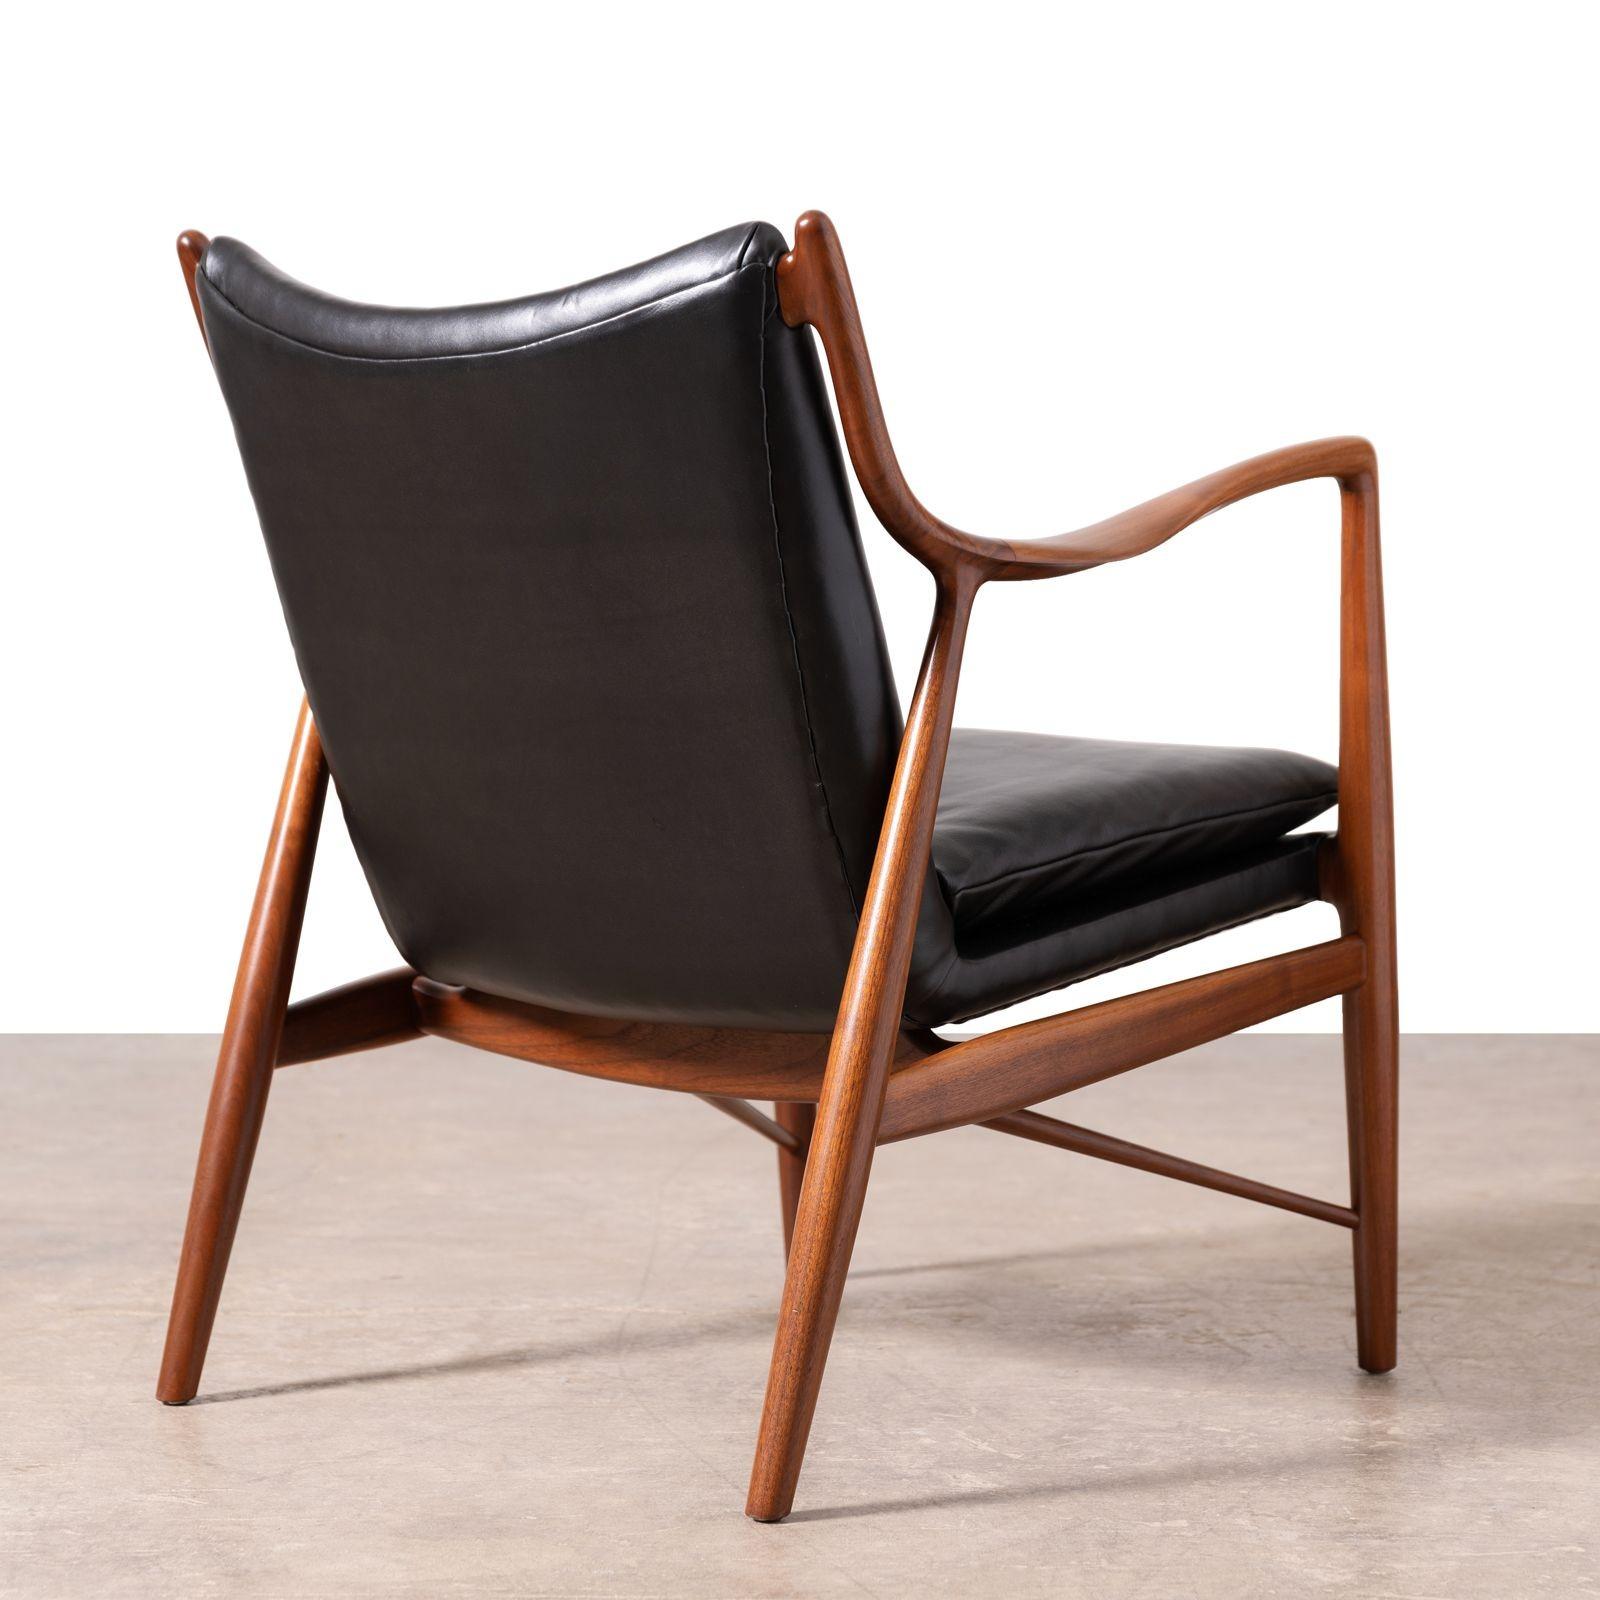 Finn Juhl NV-45 Scandinavian Lounge Chairs in Walnut and Black Leather 1950s For Sale 2